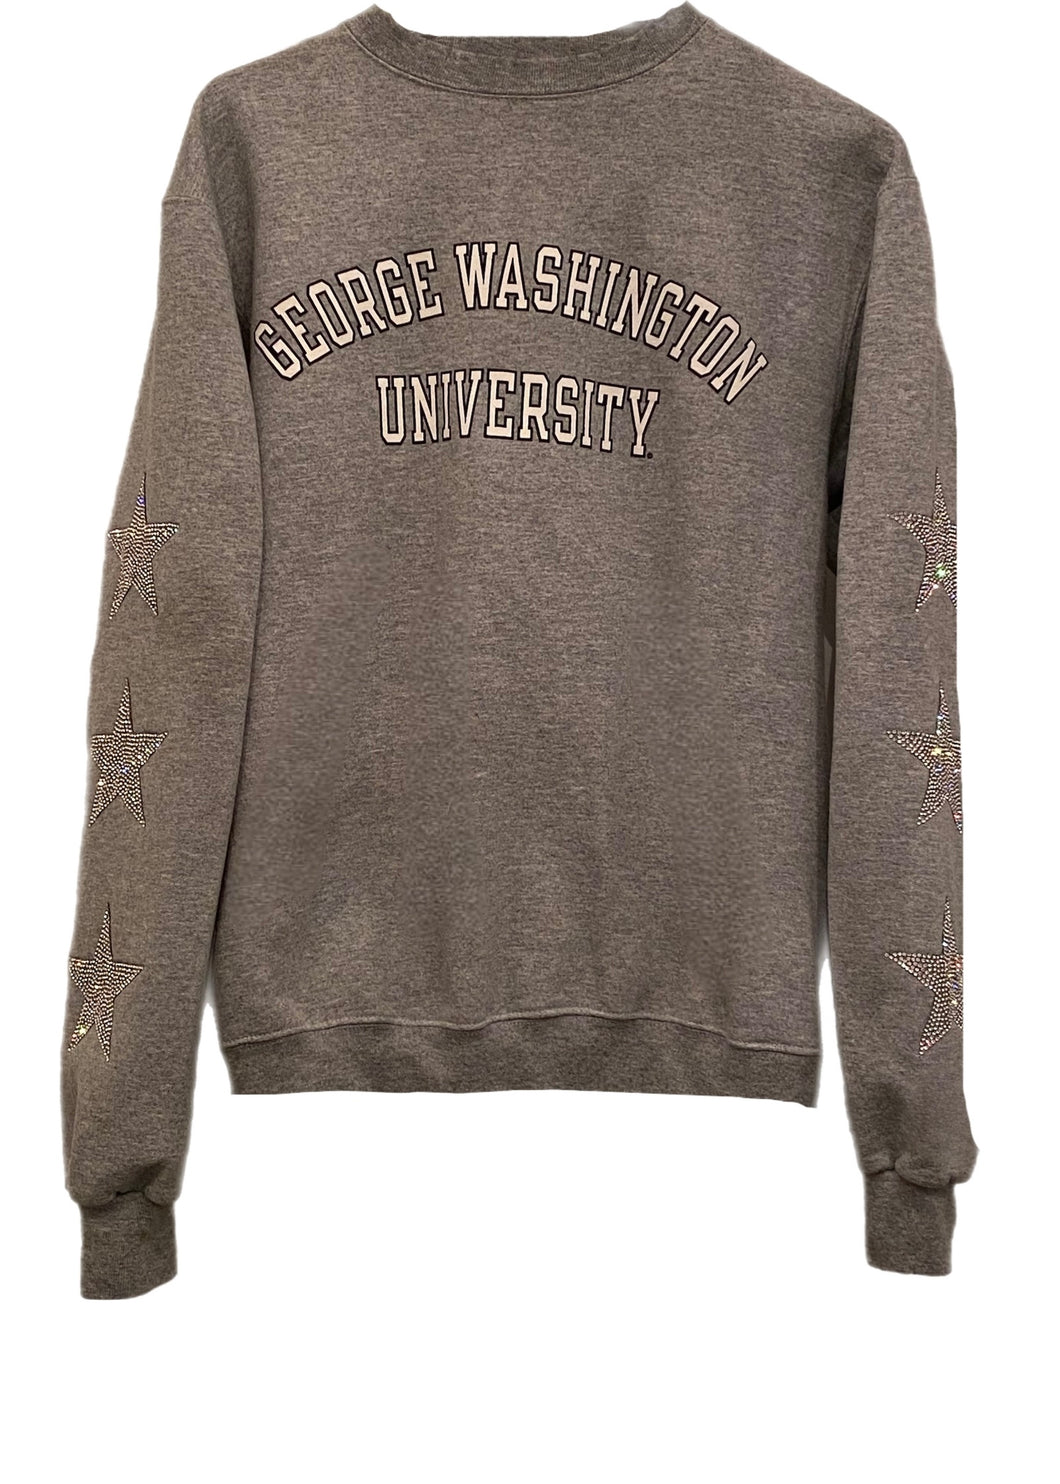 George Washington University, One of a KIND Sweatshirt with Three Crystal Star Design